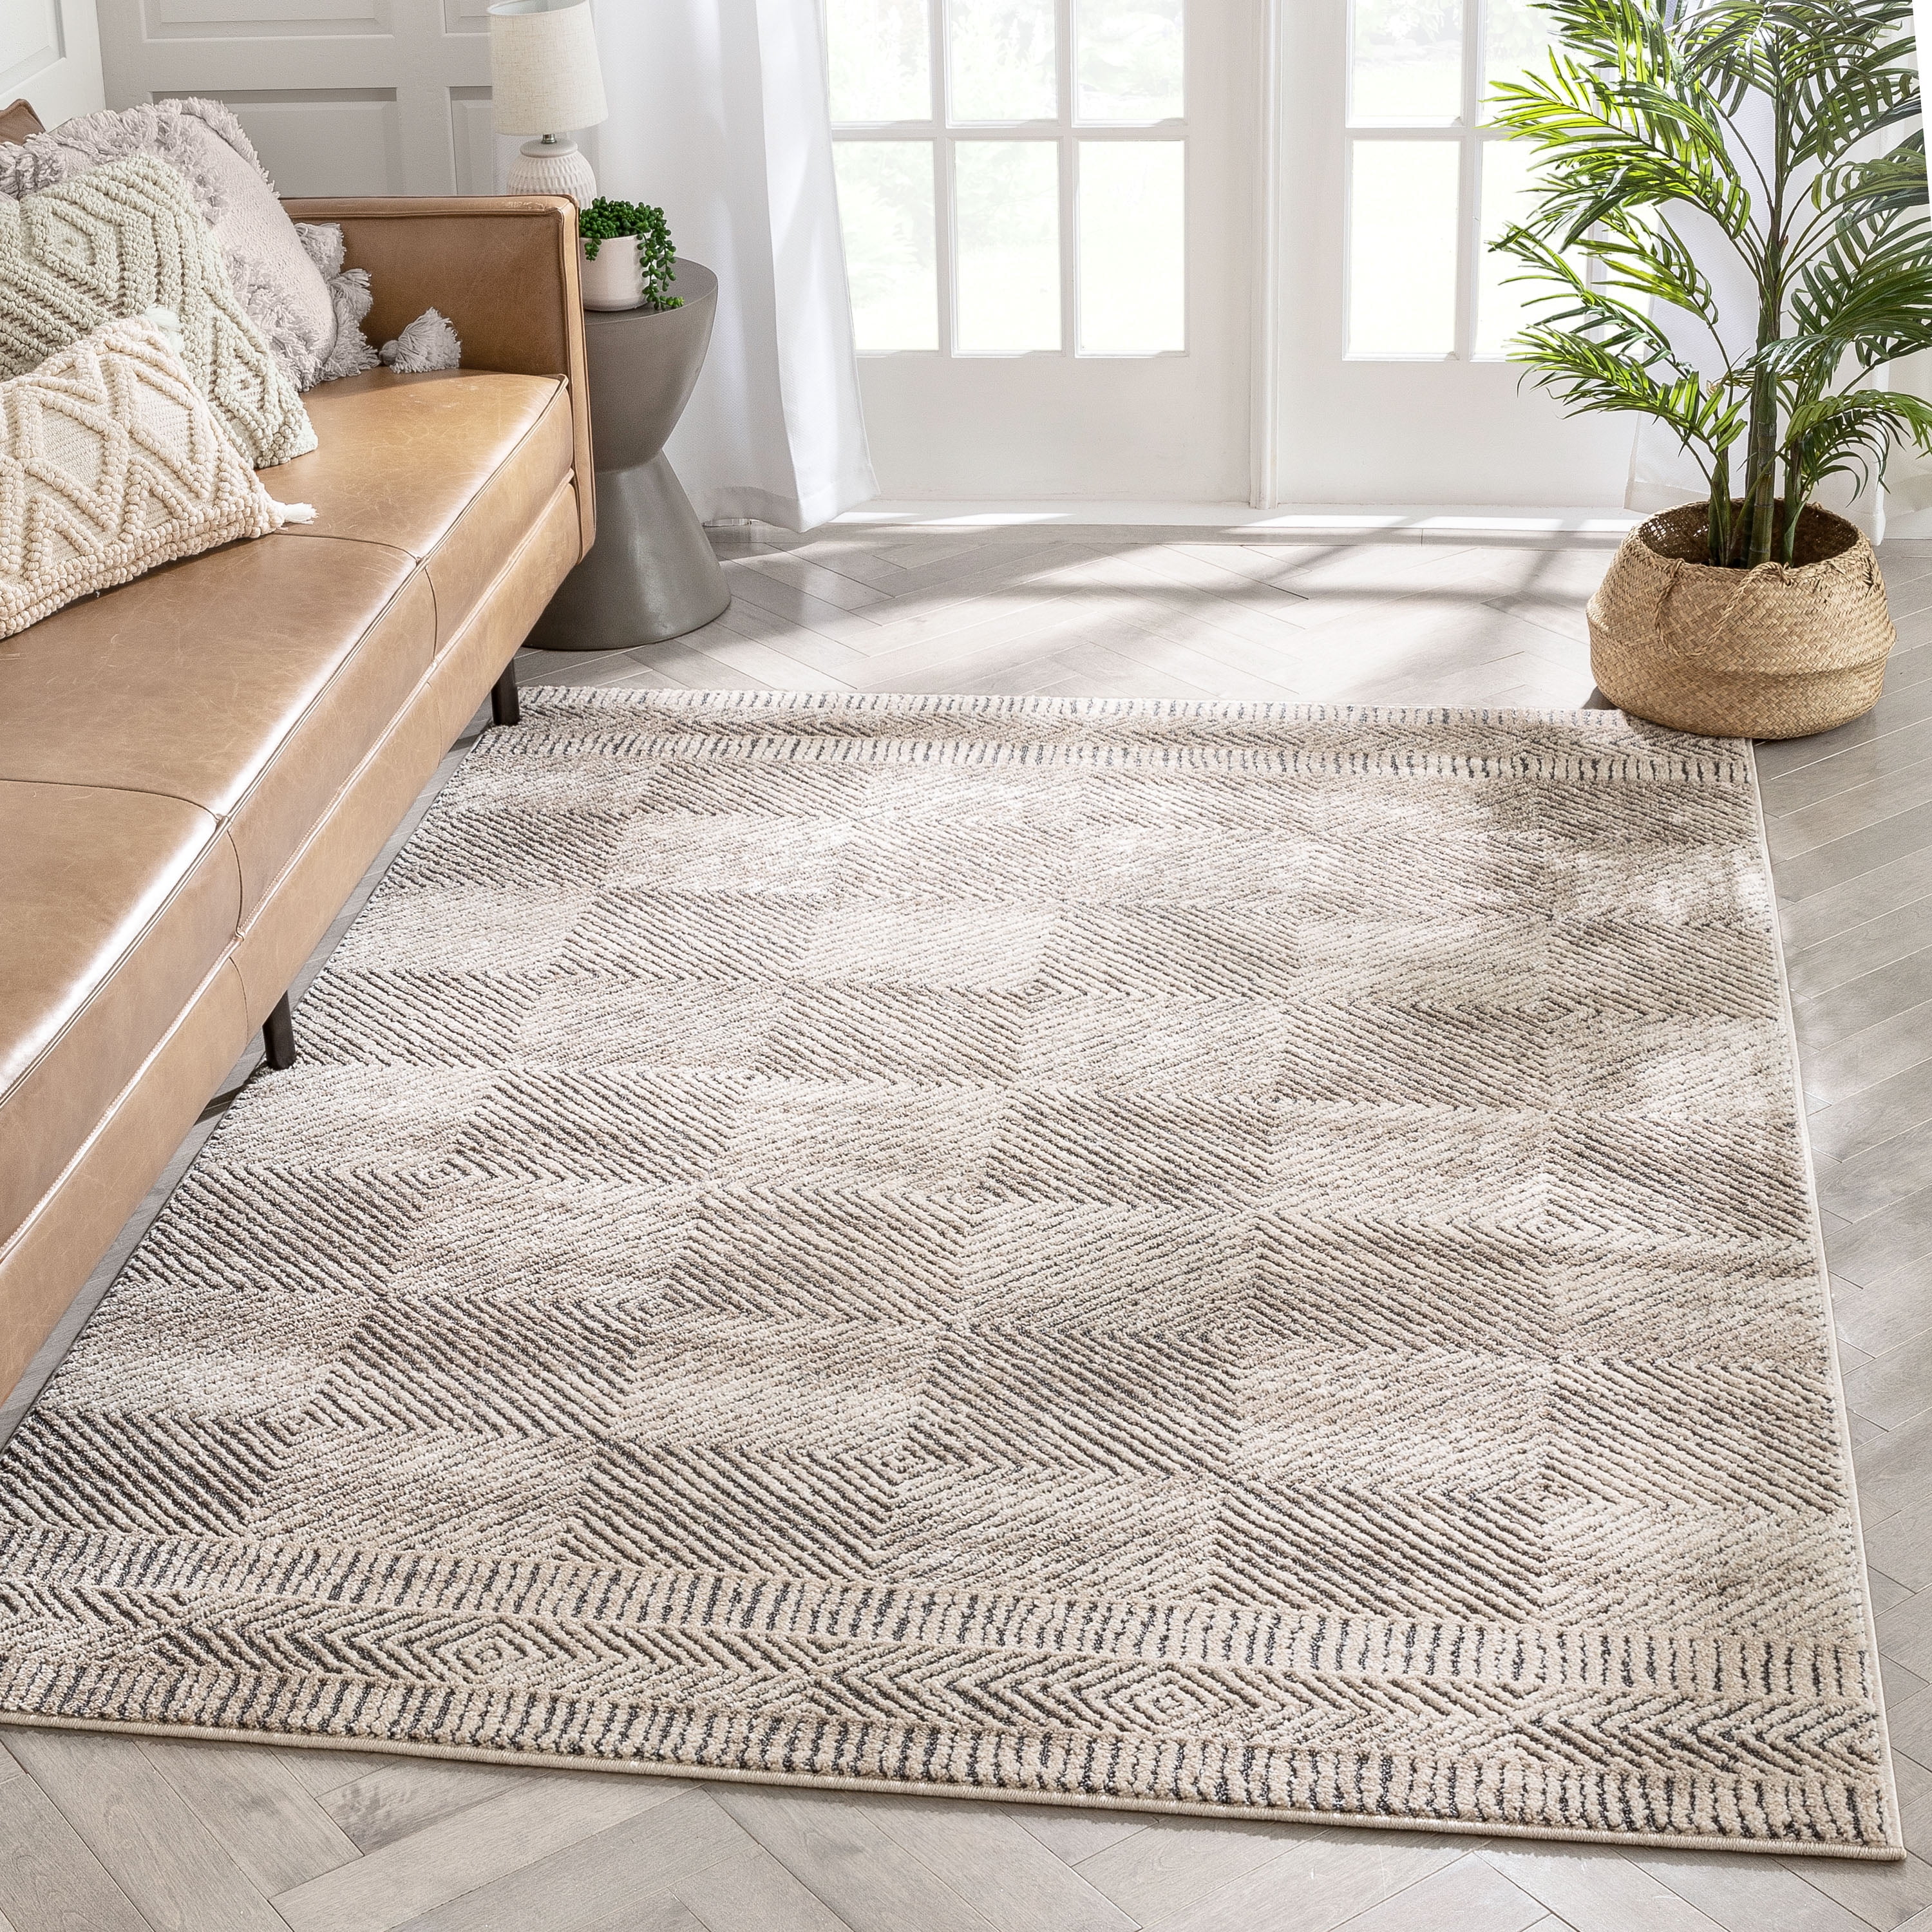 Geometric Design Living Area Rug Thick Short Pile Quality Carpet in Grey Tones 